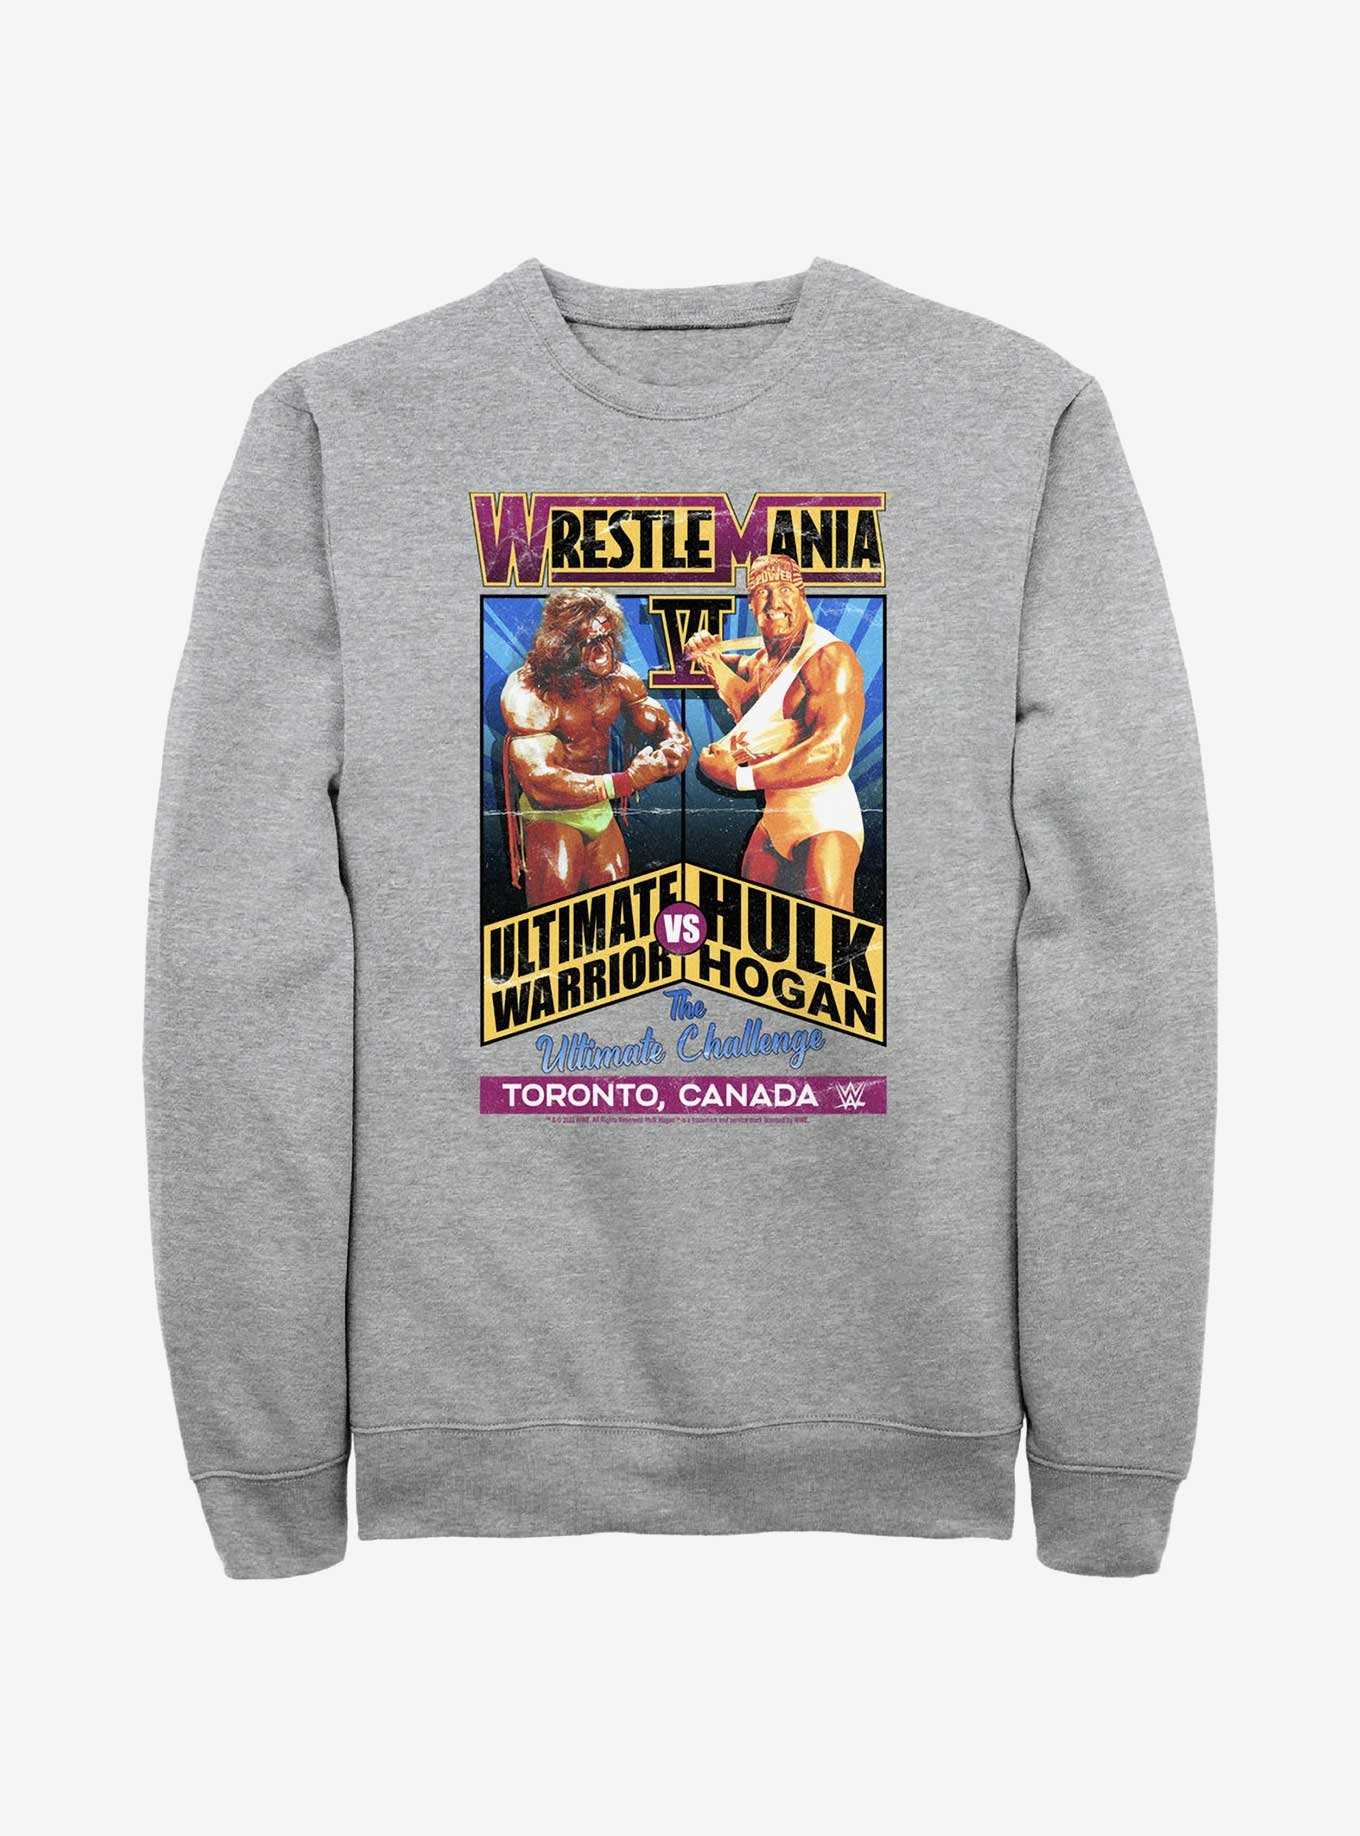 WWE Wrestlemania VI Ultimate Warrior Vs Hulk Hogan Sweatshirt, , hi-res